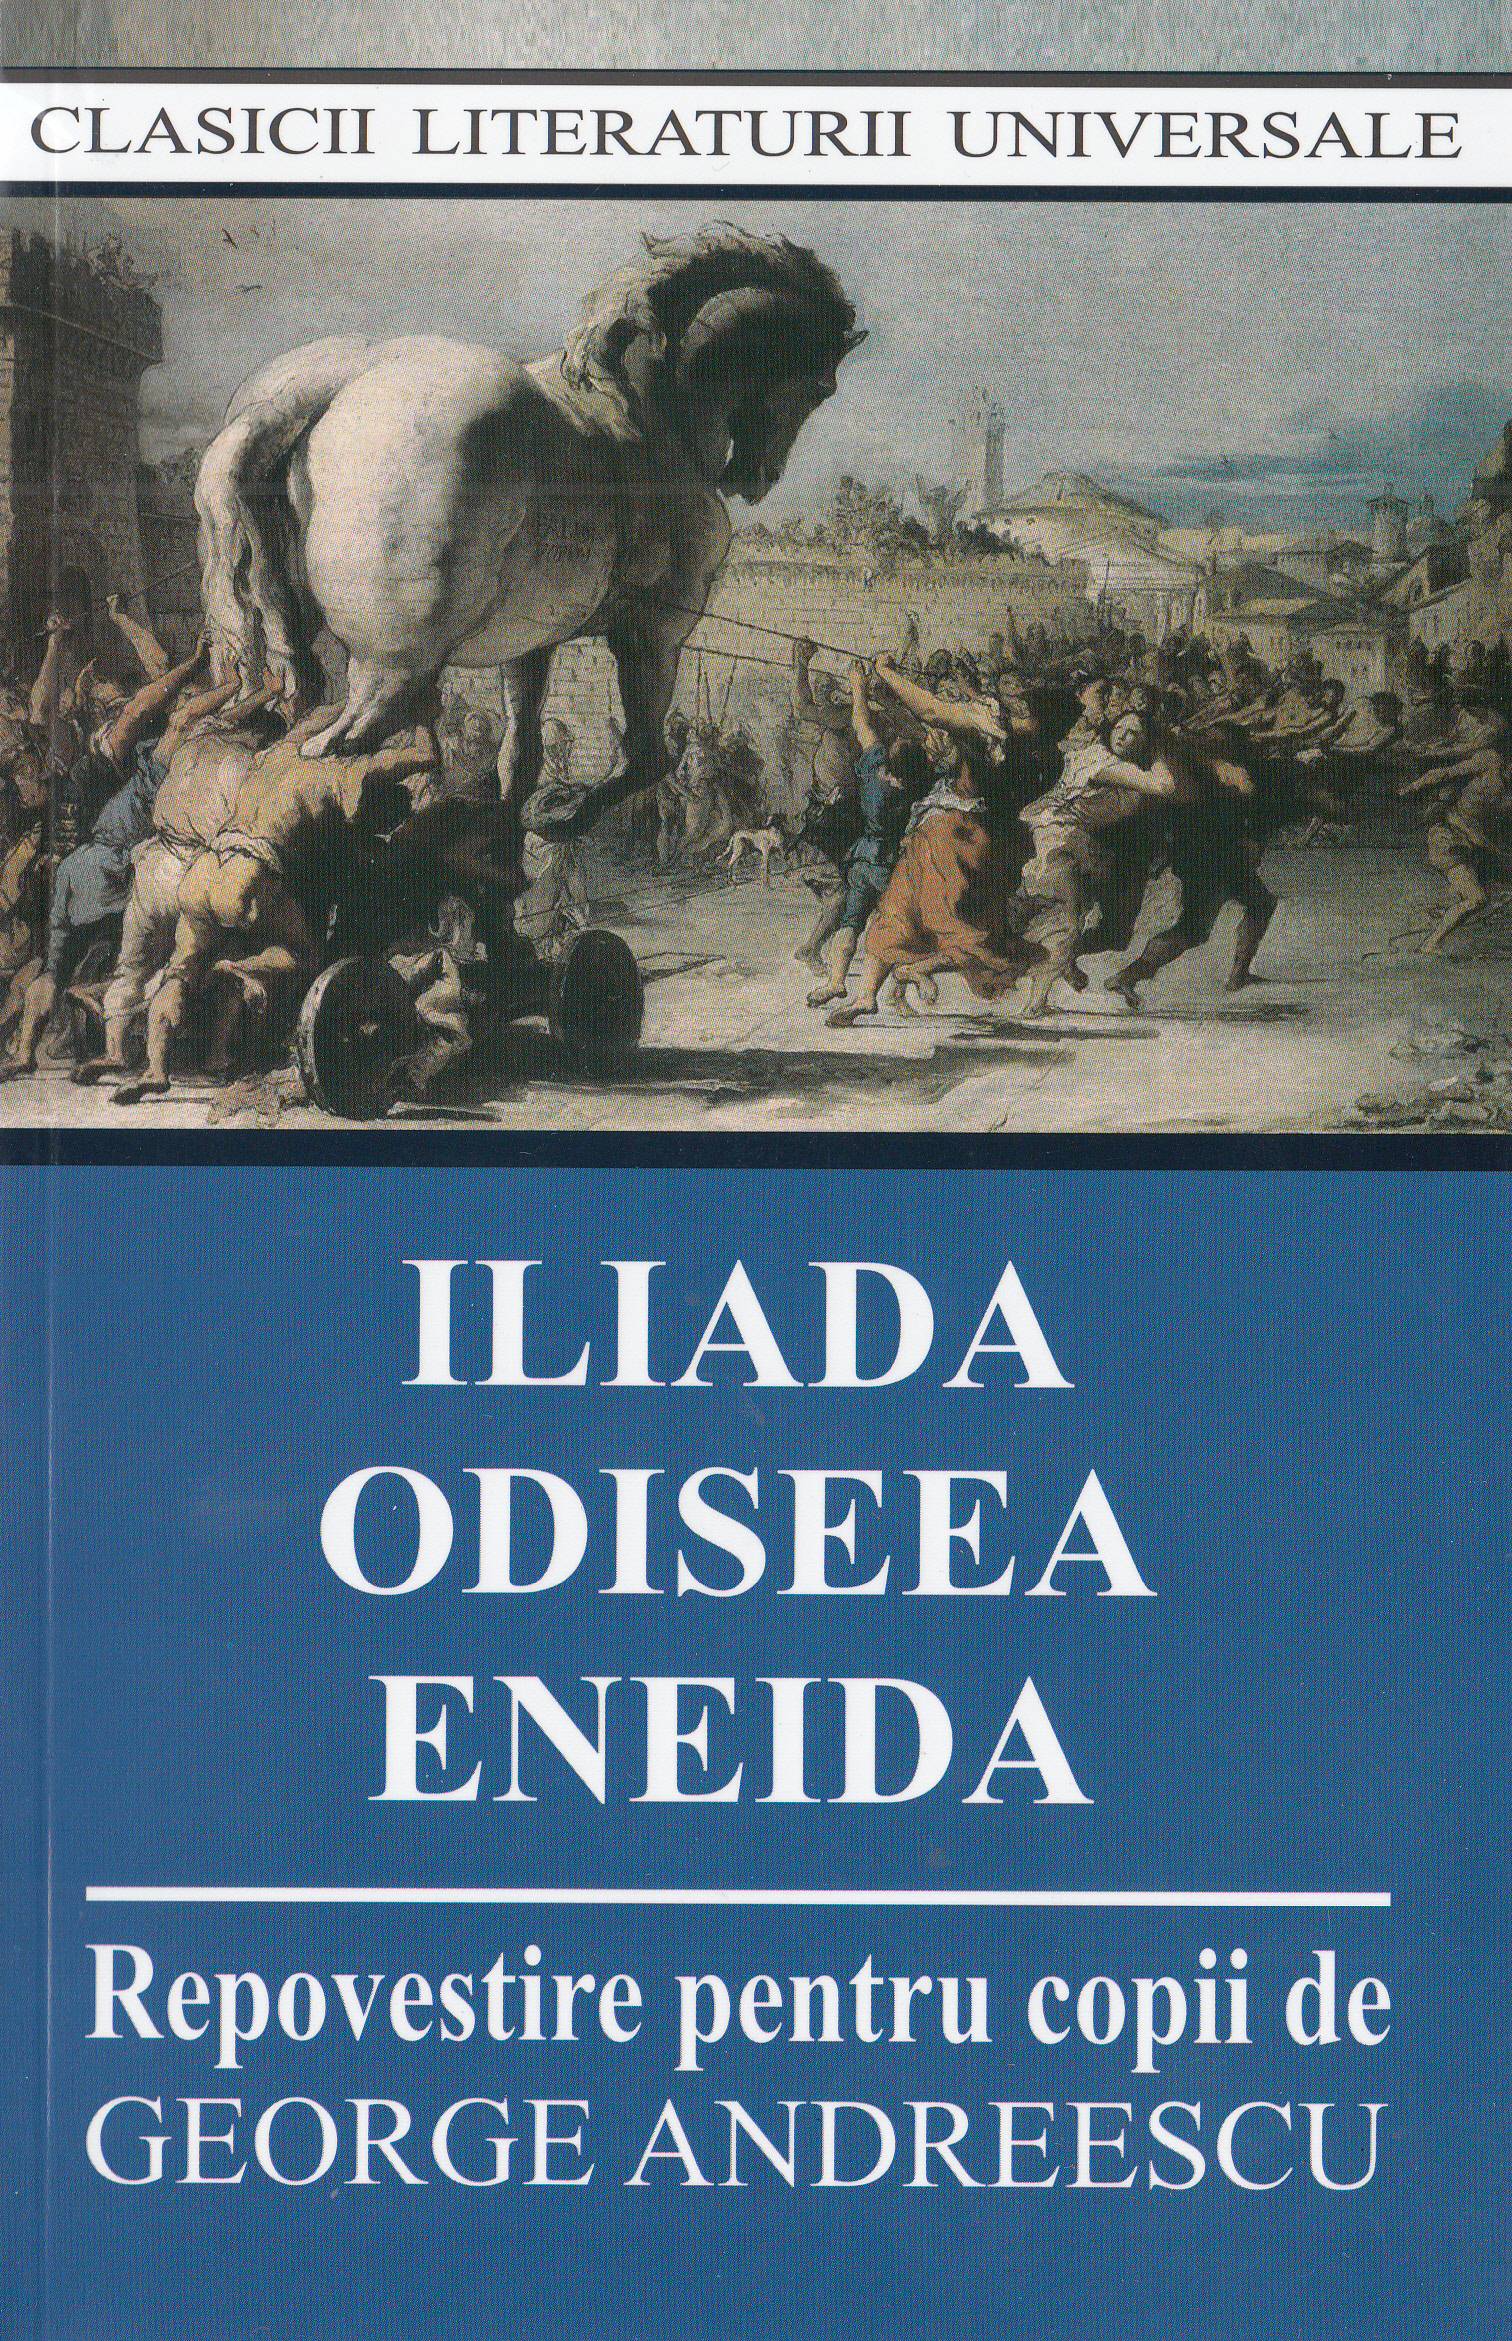 Iliada, Odiseea, Eneida